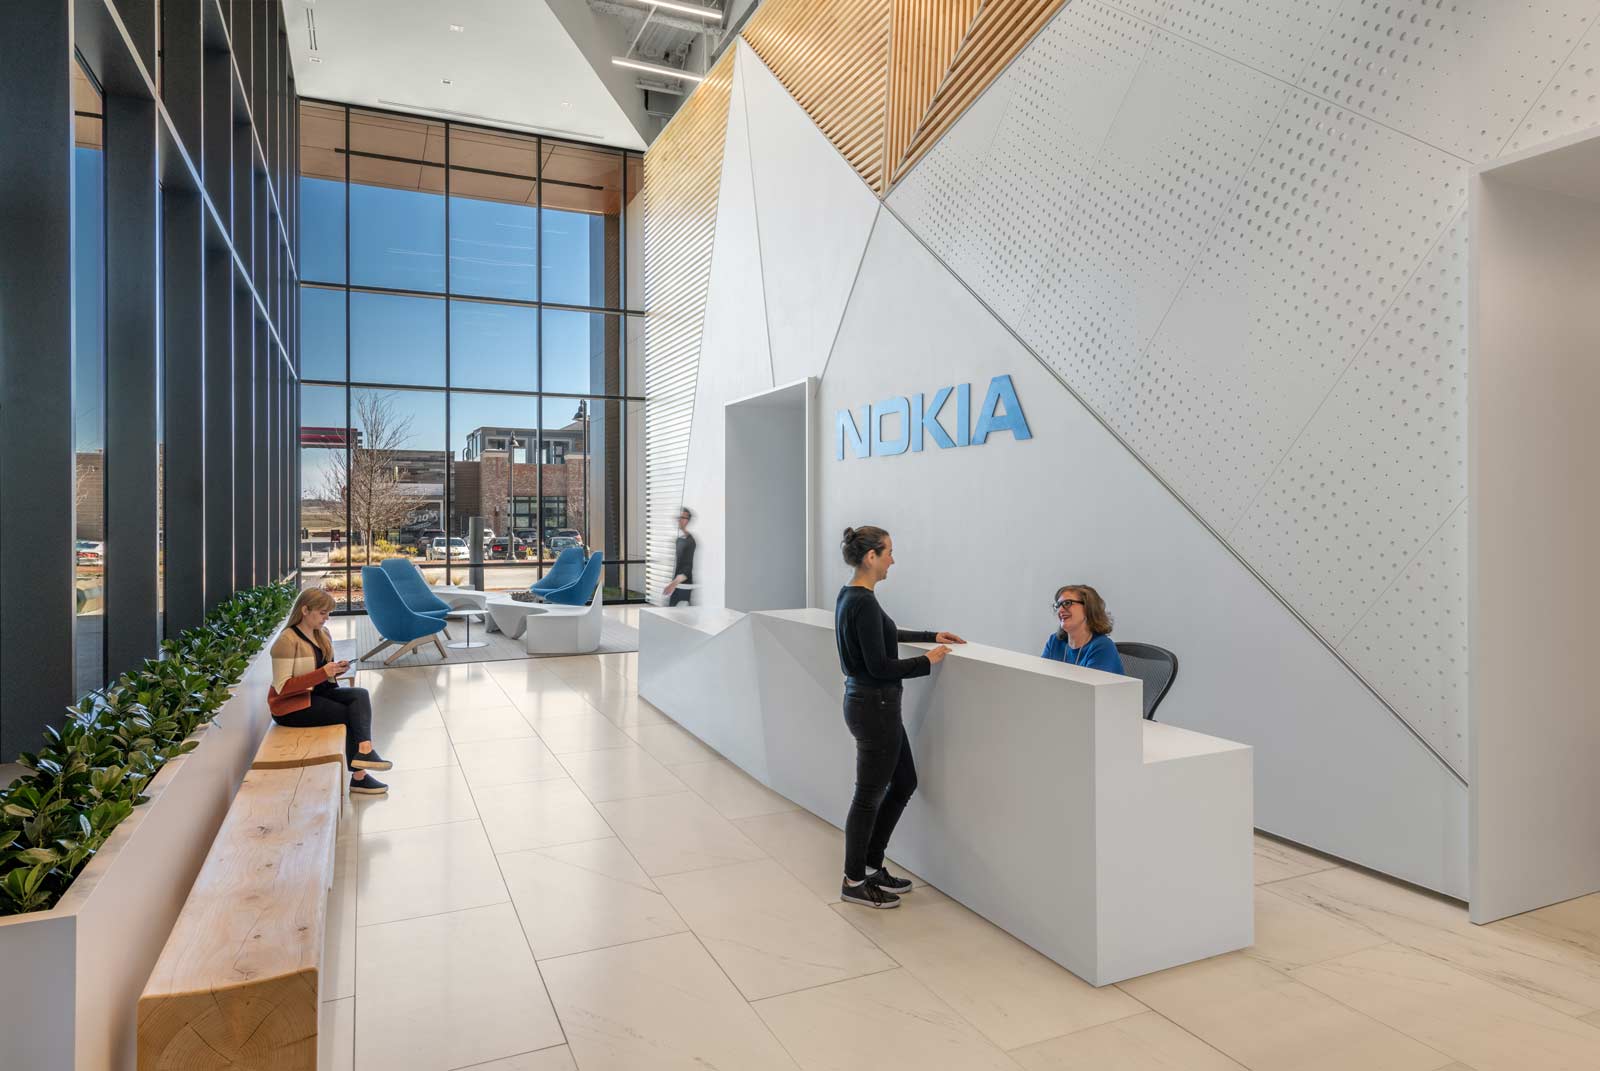 Nokia North American Headquarters